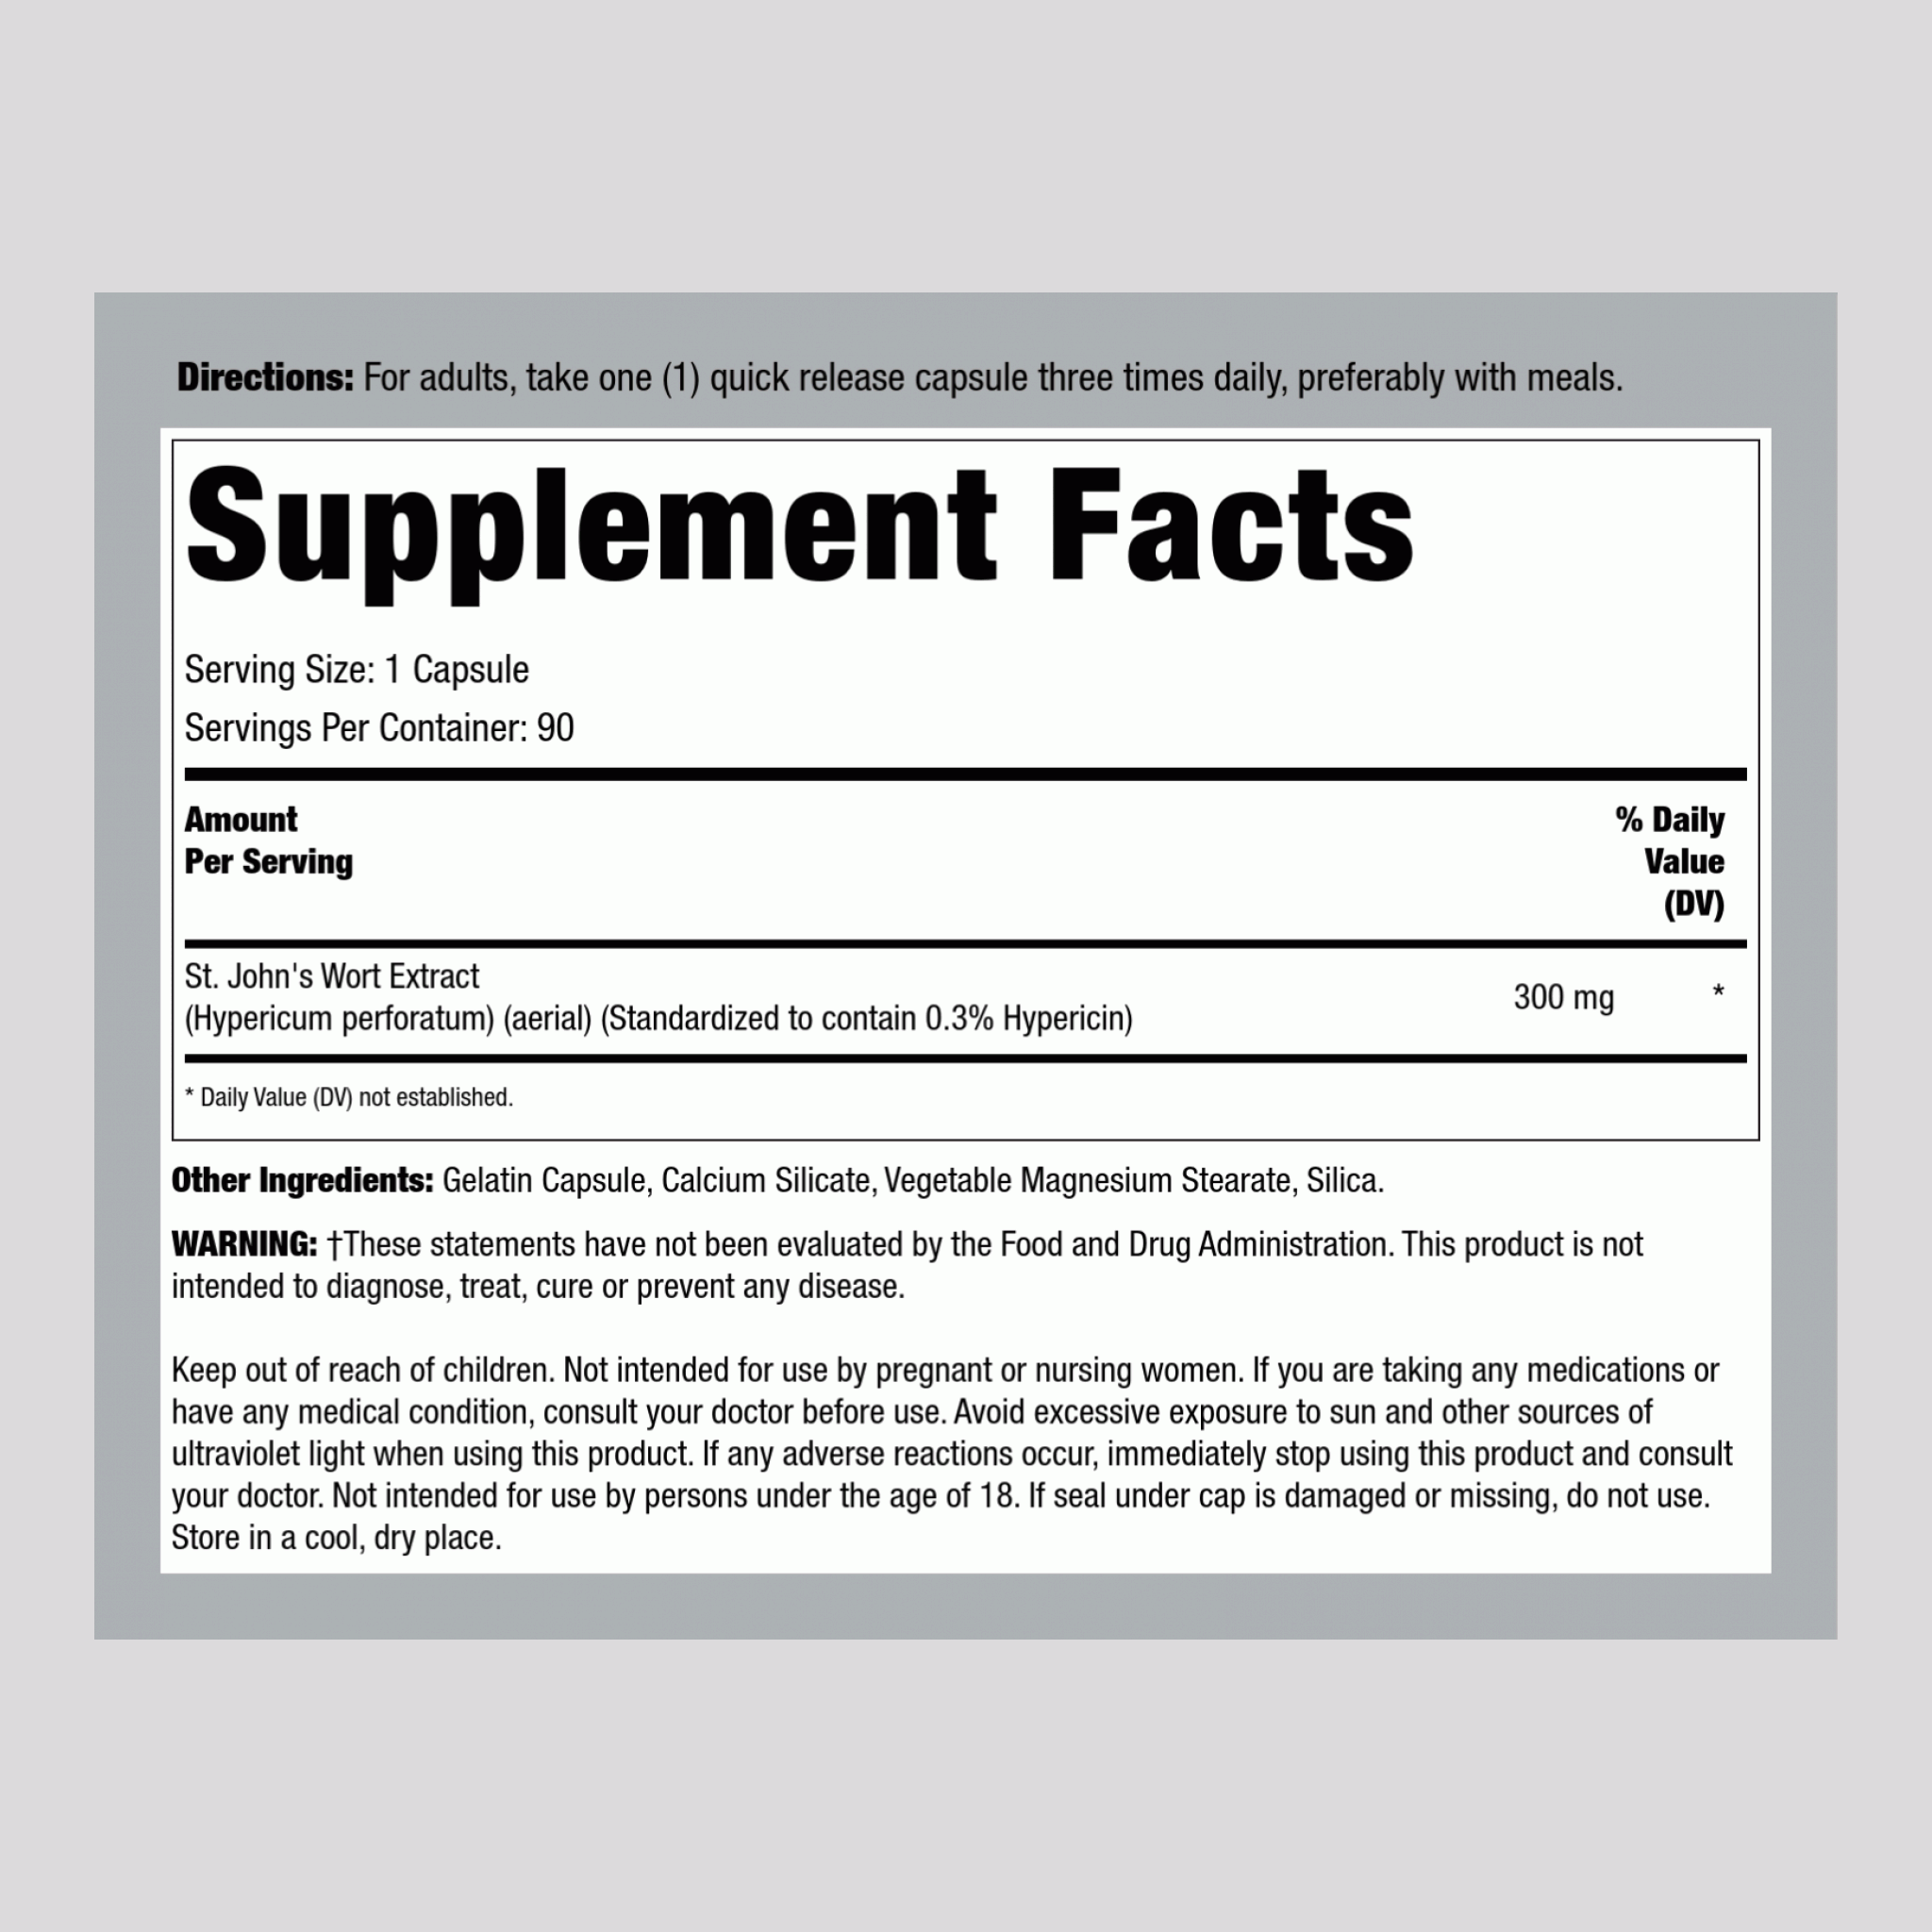 St. John's Wort Standardized Extract, 300 mg, 90 Capsules